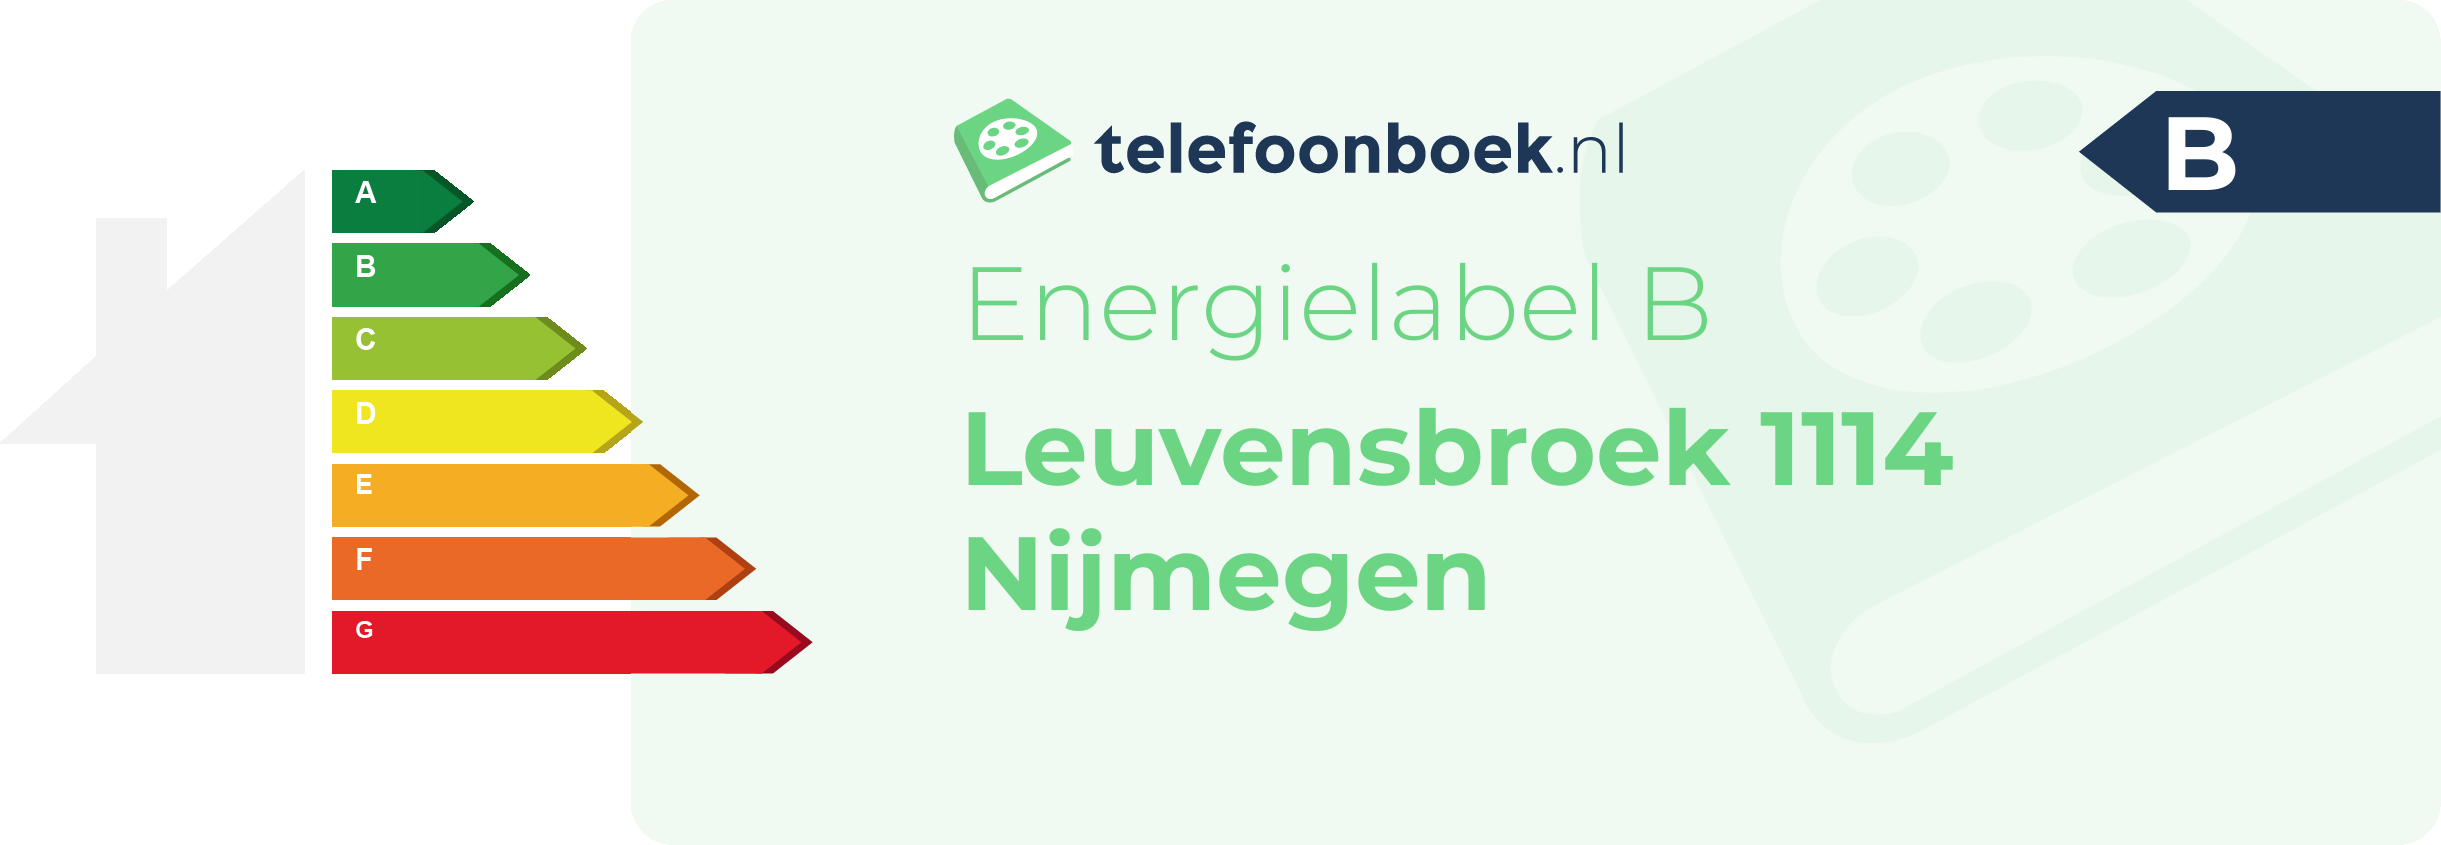 Energielabel Leuvensbroek 1114 Nijmegen